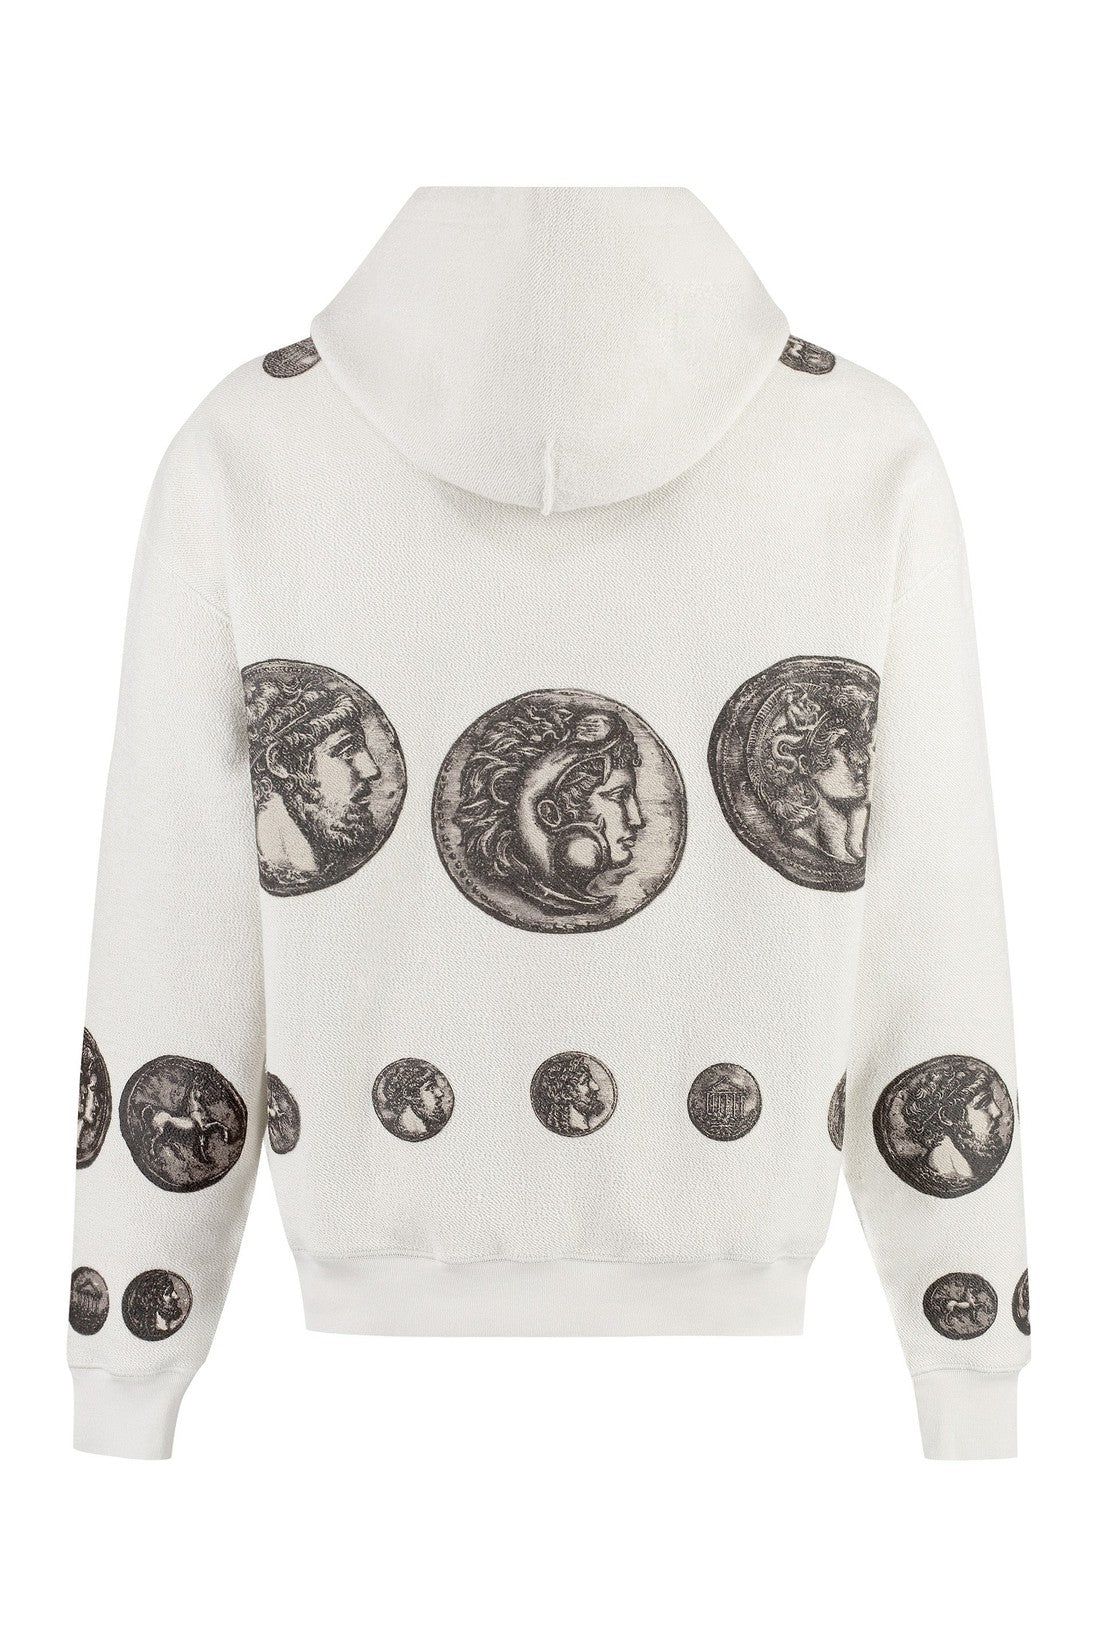 Dolce & Gabbana-OUTLET-SALE-Jersey sweatshirt-ARCHIVIST